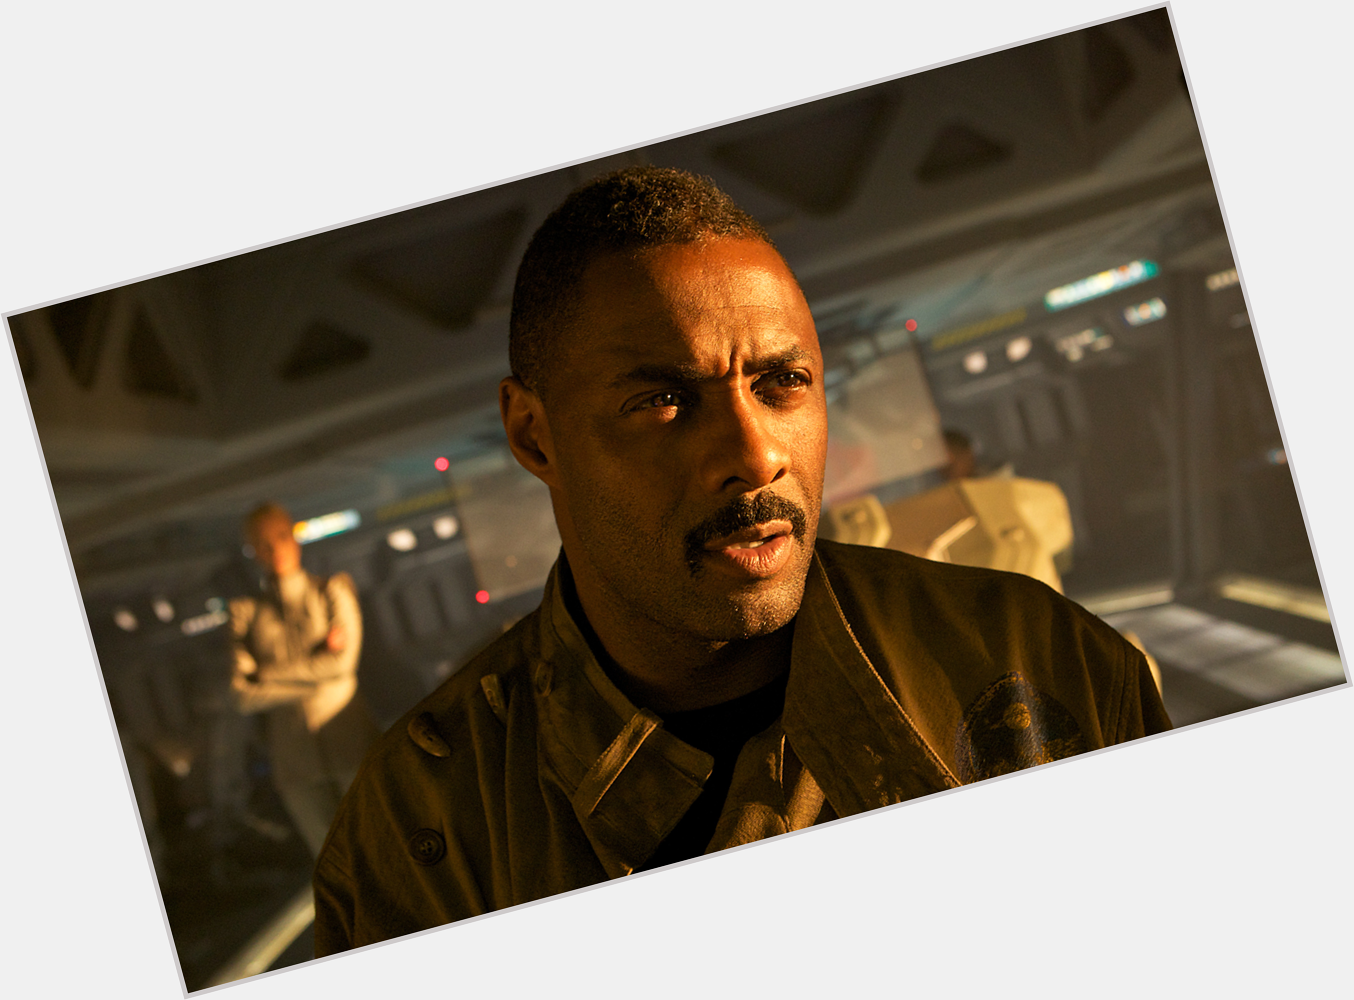 Happy birthday to the intrepid captain Janek himself: Idris Elba! 

(Also, returns!) 